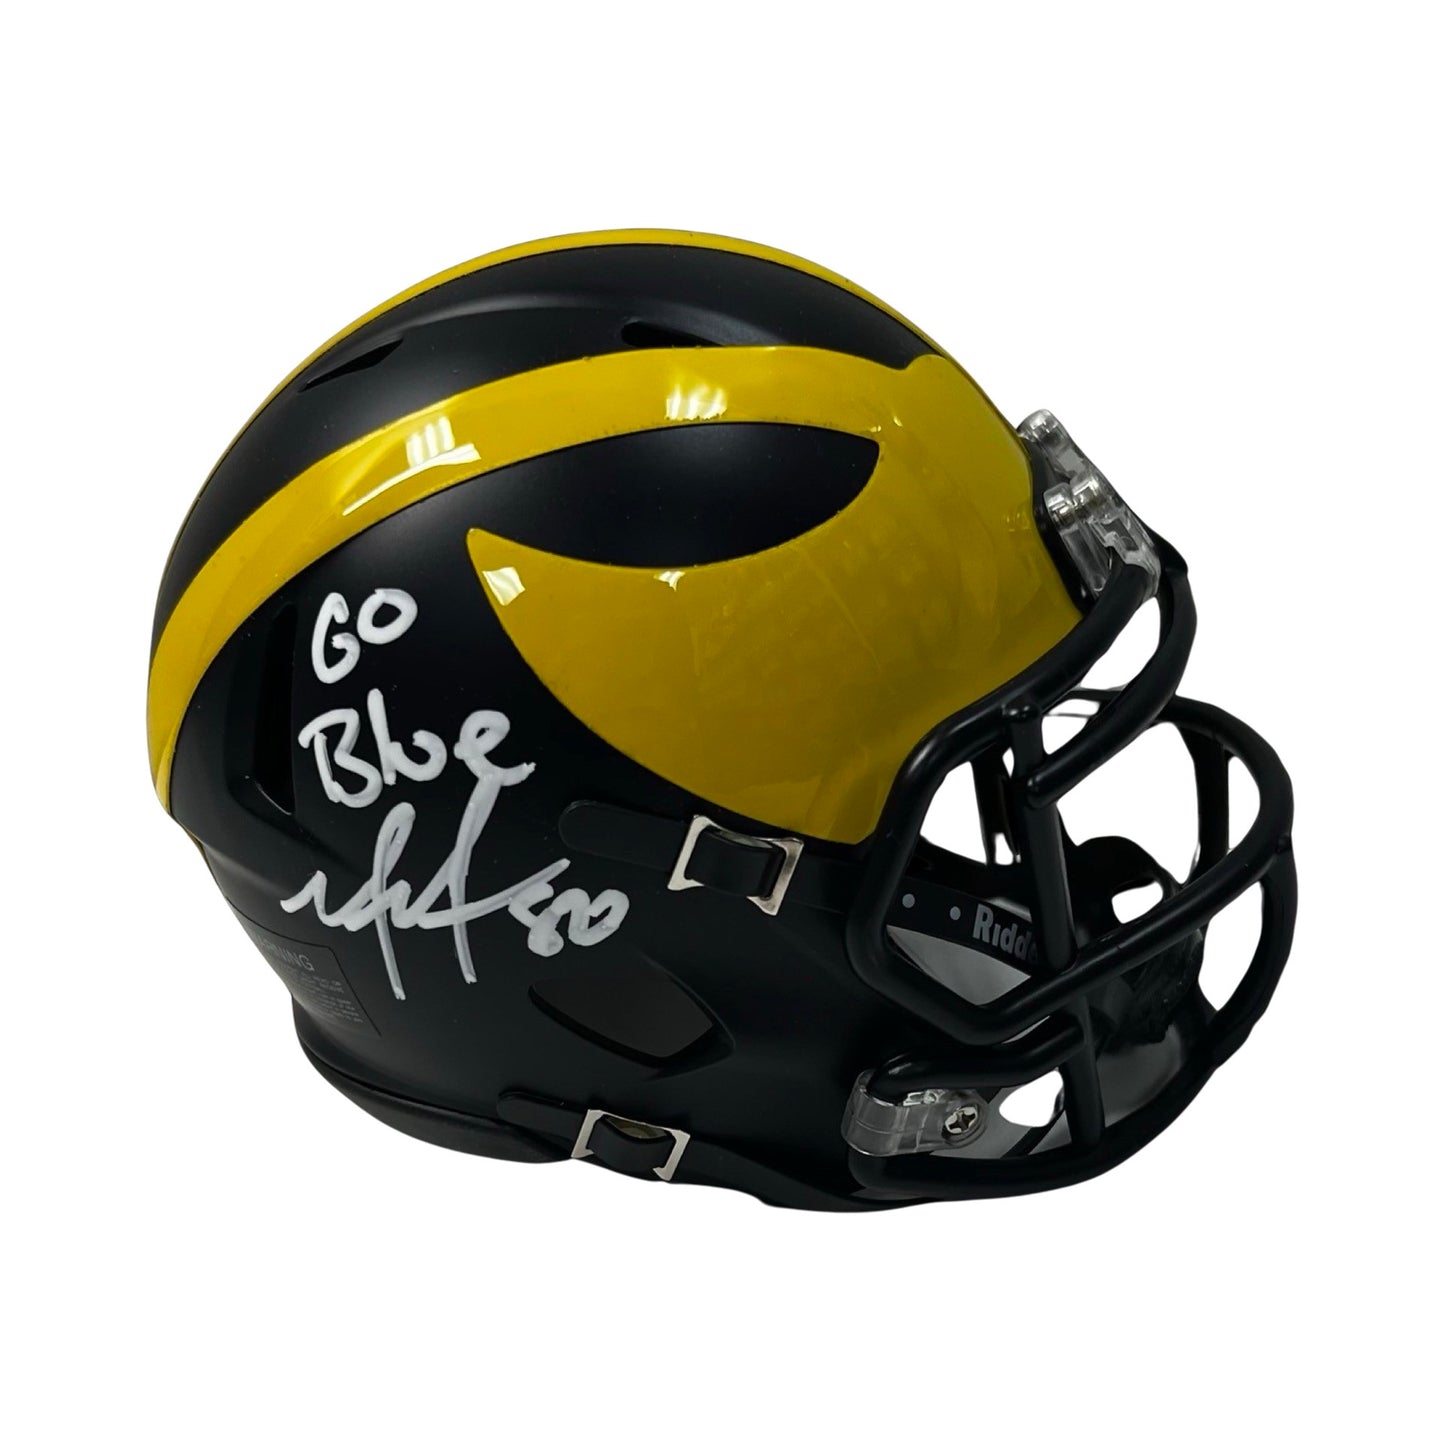 Mario Manningham Autographed Michigan Wolverines Speed Mini Helmet "Go Blue" Inscription Steiner CX